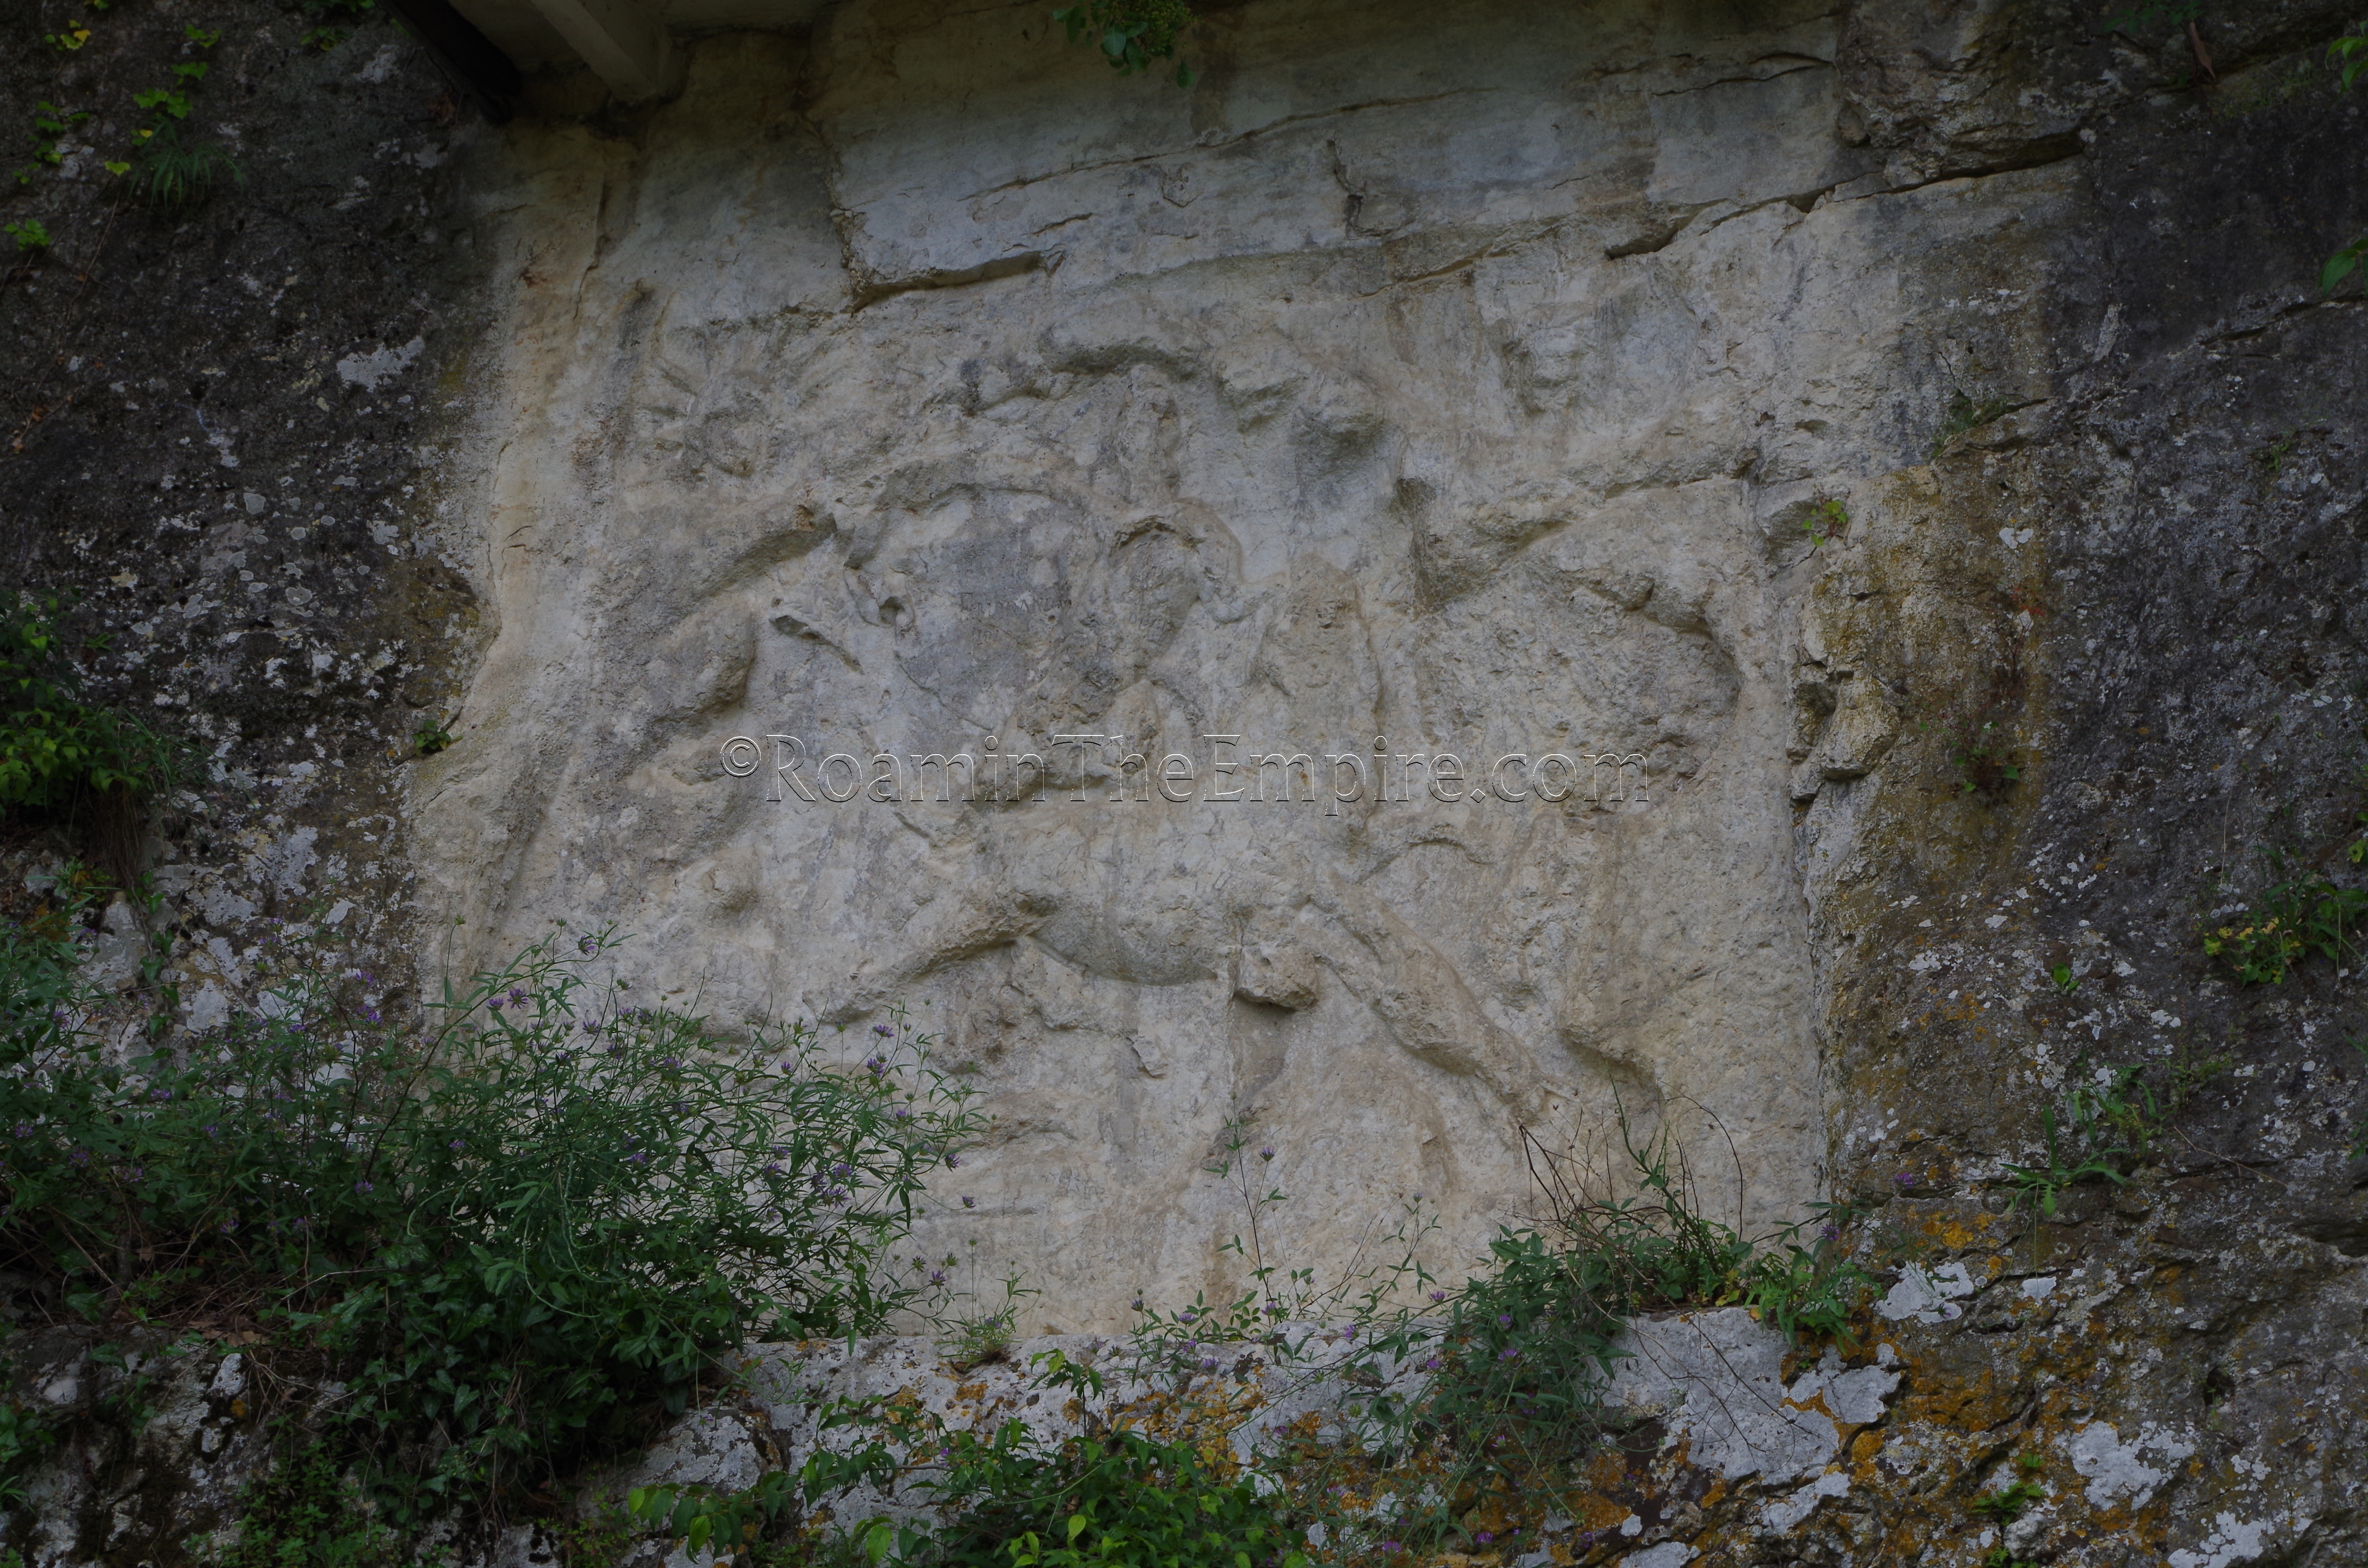 Bourg-Saint-Andéol tauroctony relief. Gallia Narbonensis.